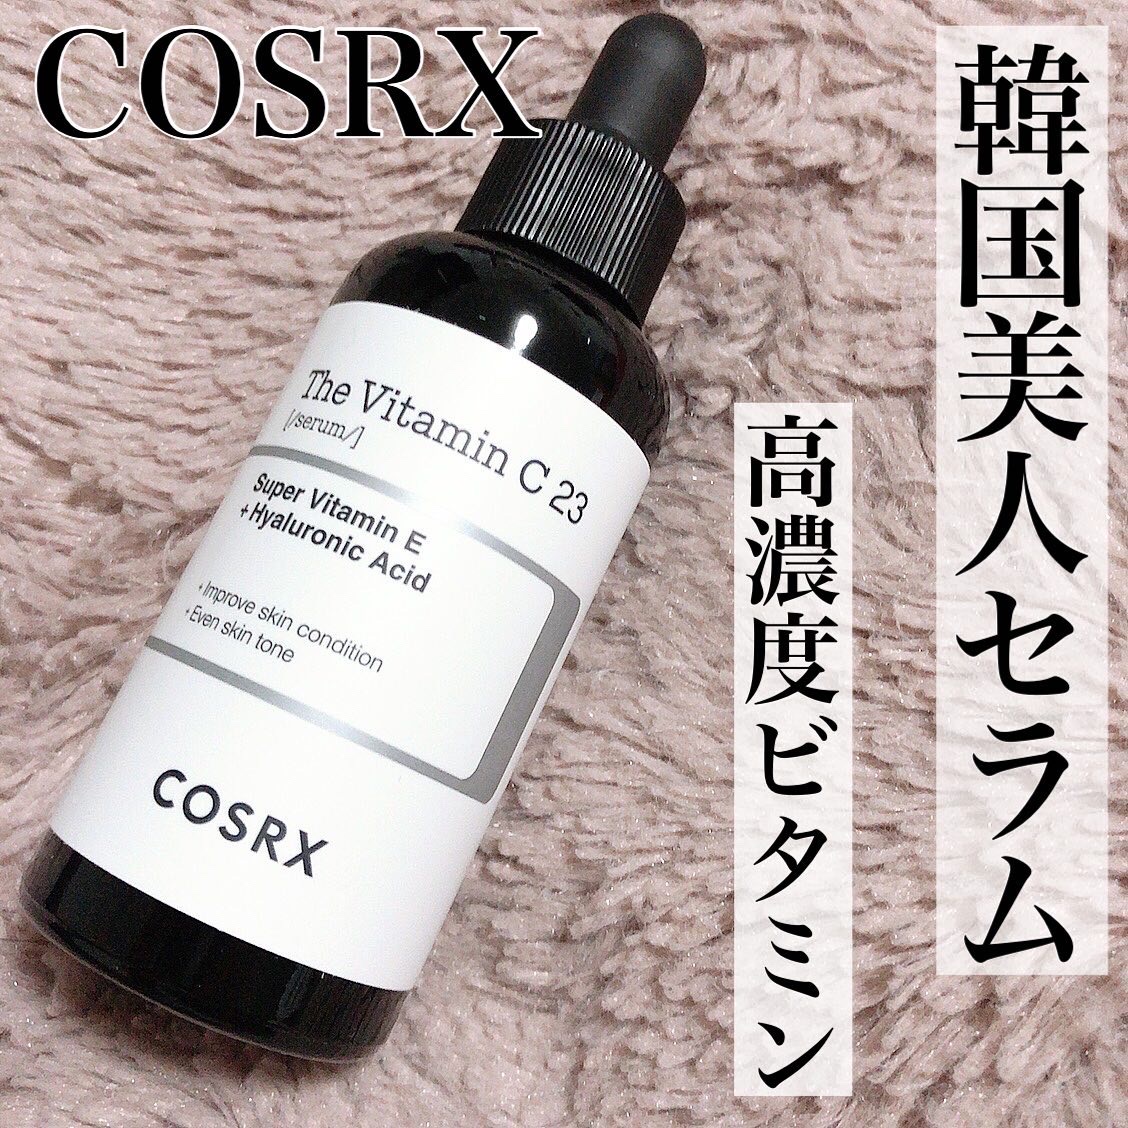 cosrx ビタミンC 美容液 The Vitamin C 23 - 美容液